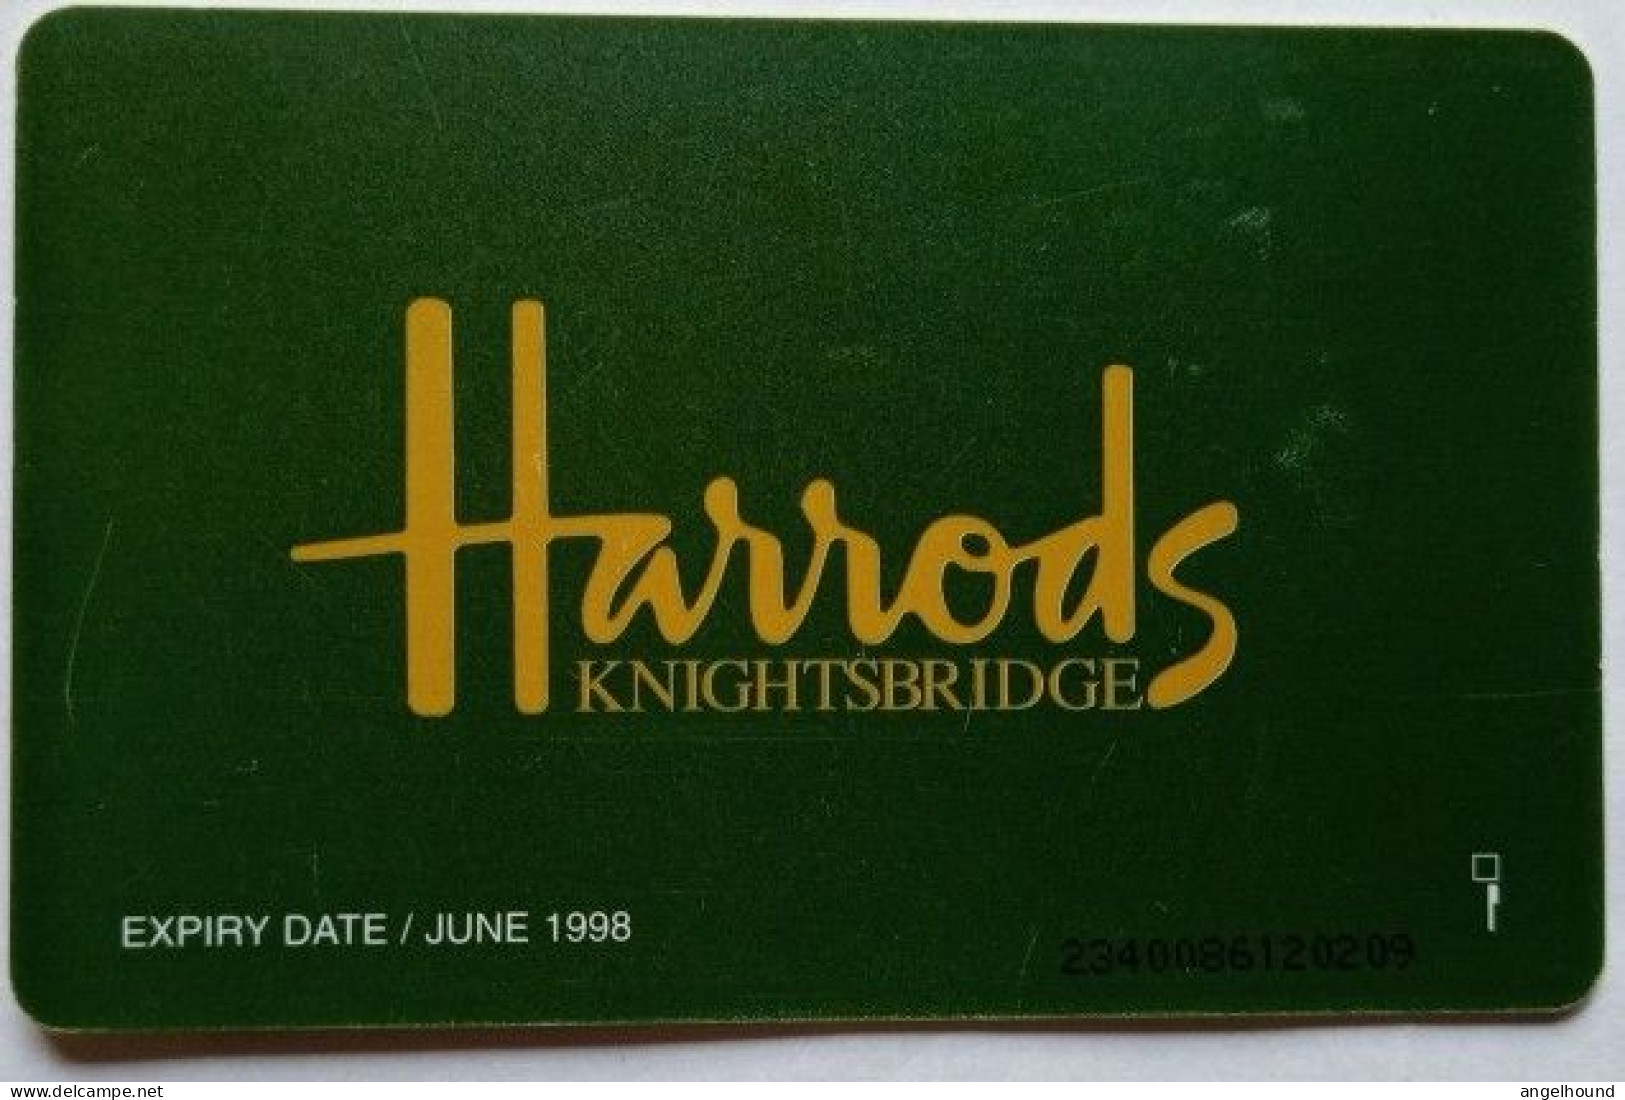 UK BT £2 Chip Card - Harrods - BT Promotionnelles